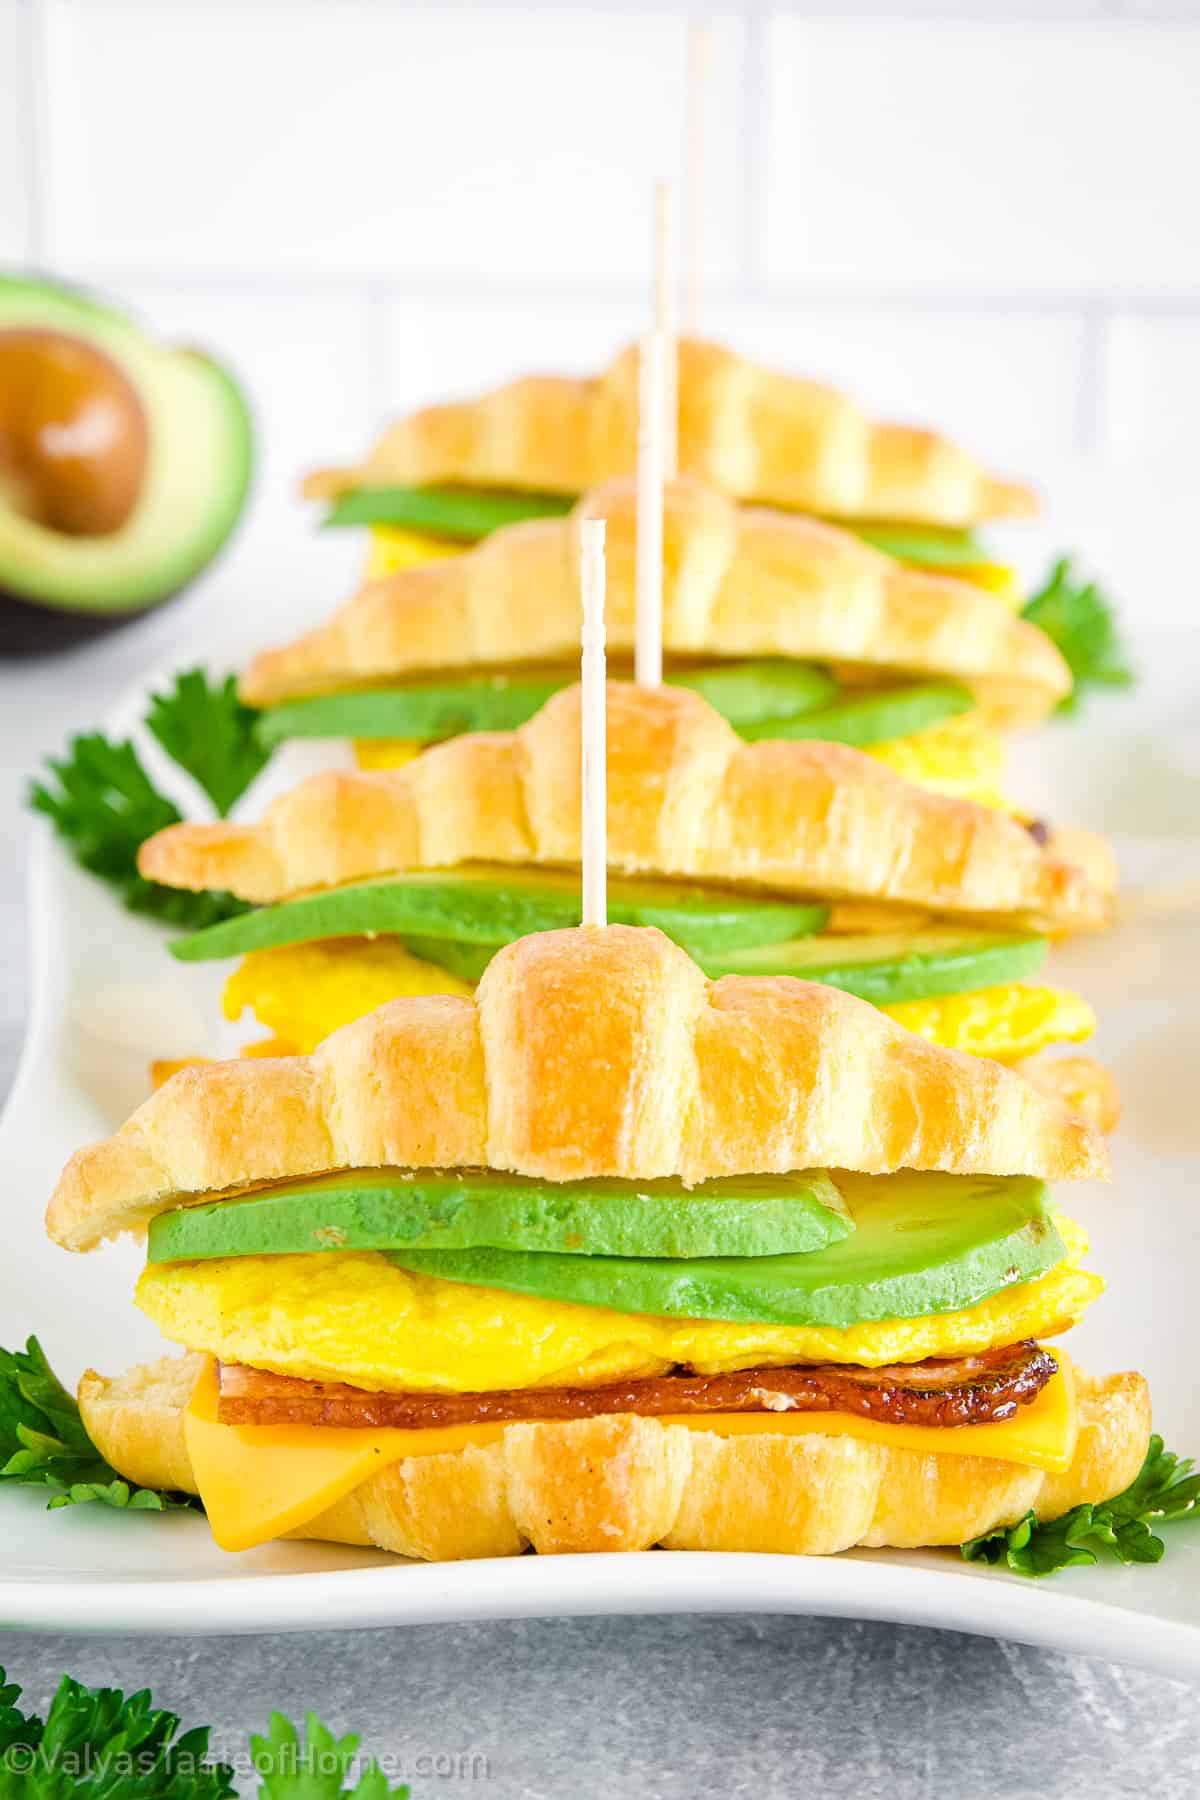 https://www.valyastasteofhome.com/wp-content/uploads/2022/01/Scrambled-Egg-Sandwich-Easy-Make-Ahead-Breakfast-Sandwich-1.jpg